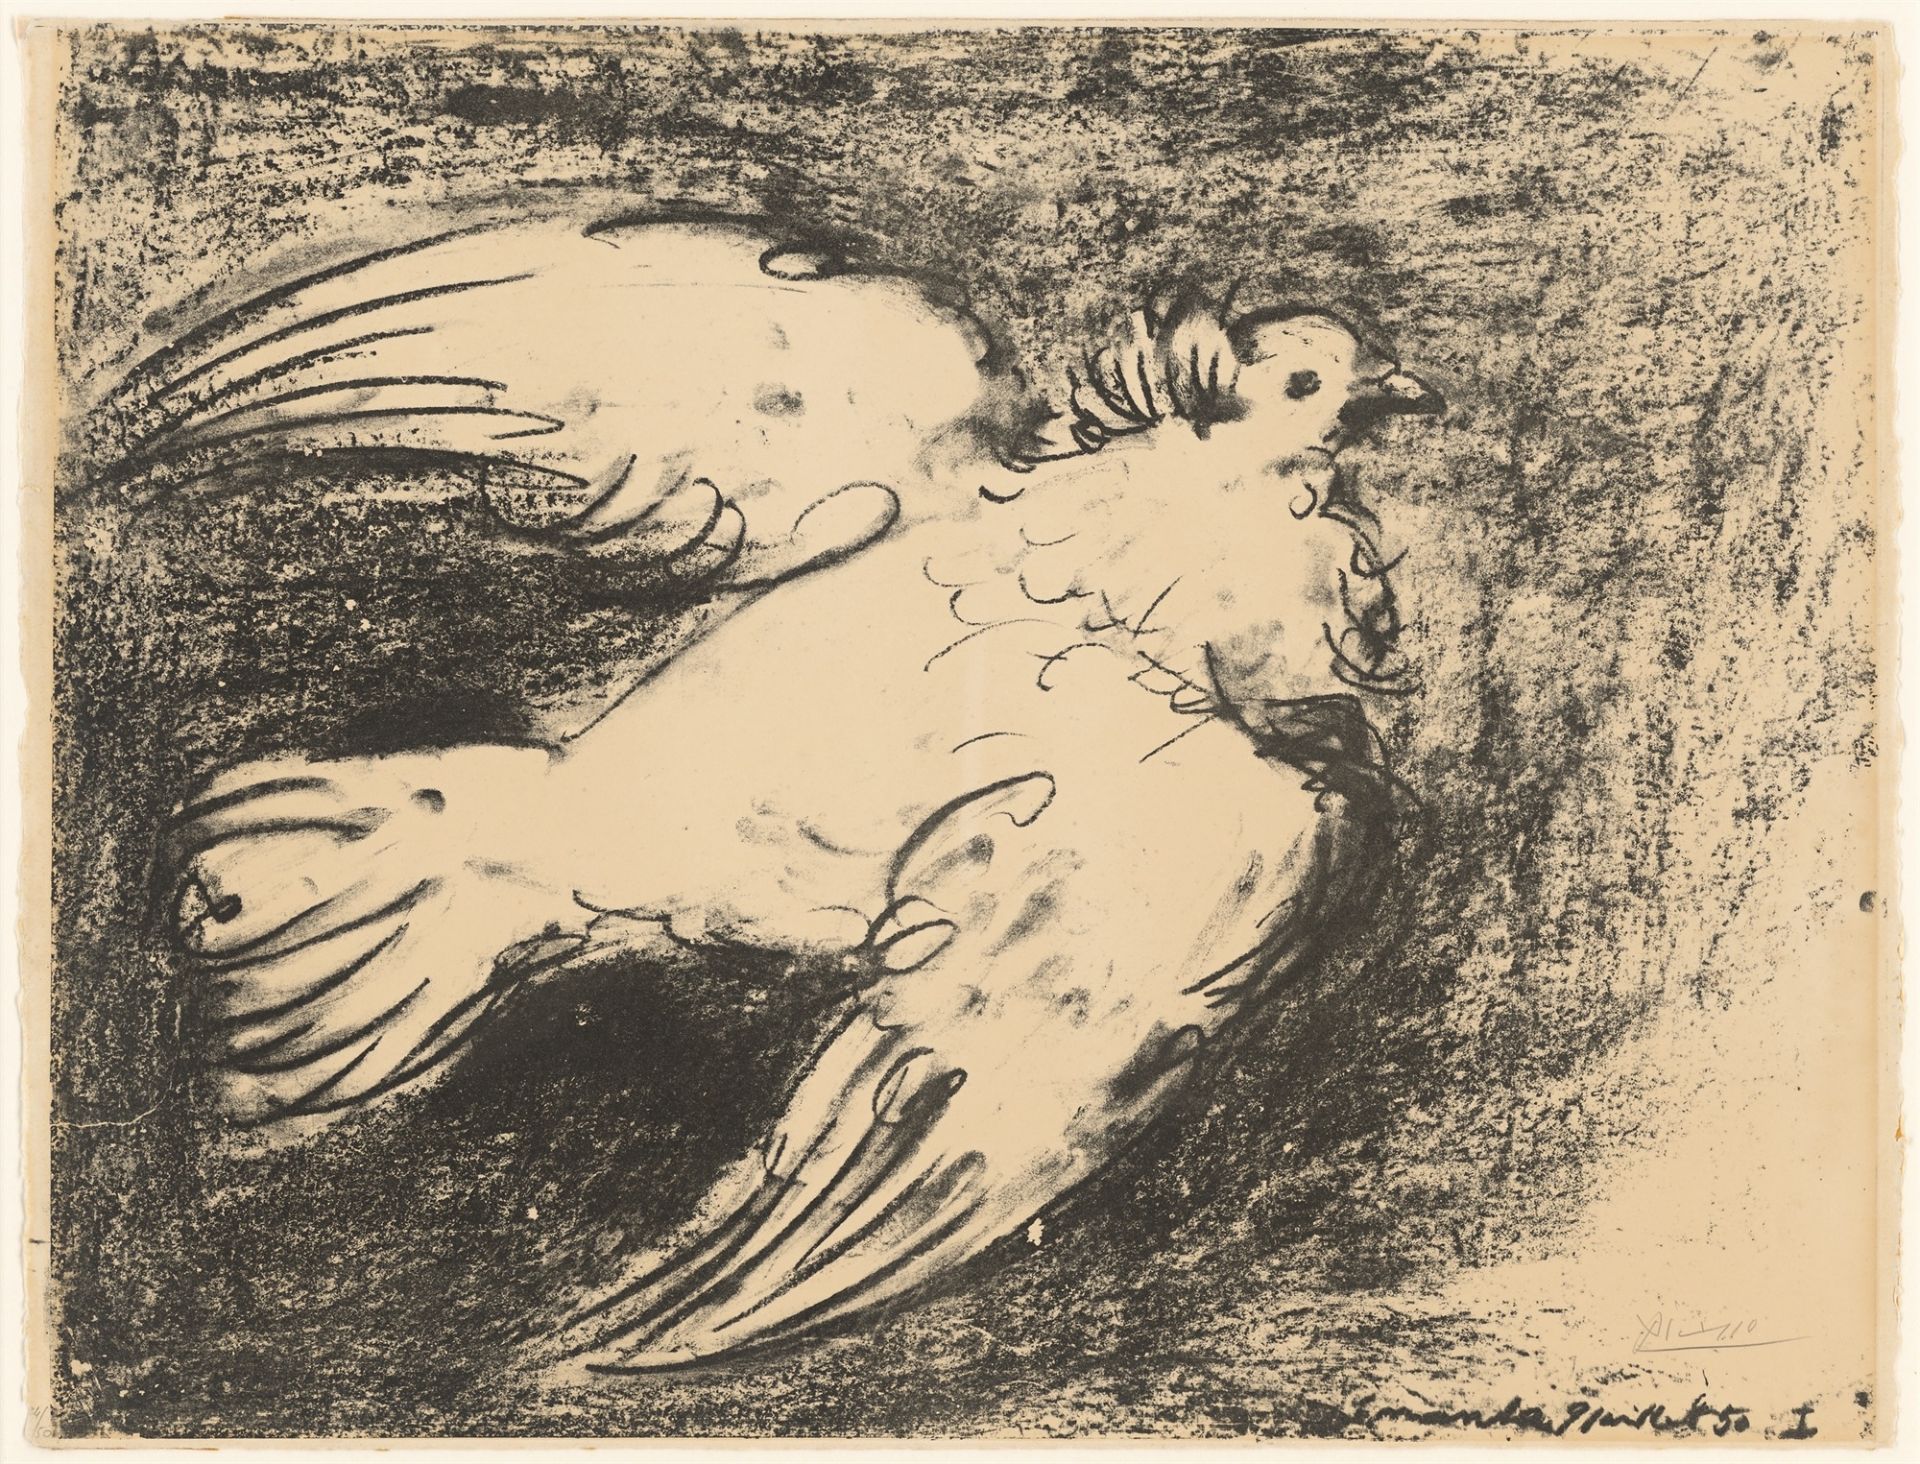 Pablo Picasso. ”La colombe en vol, fond noir”. 1950